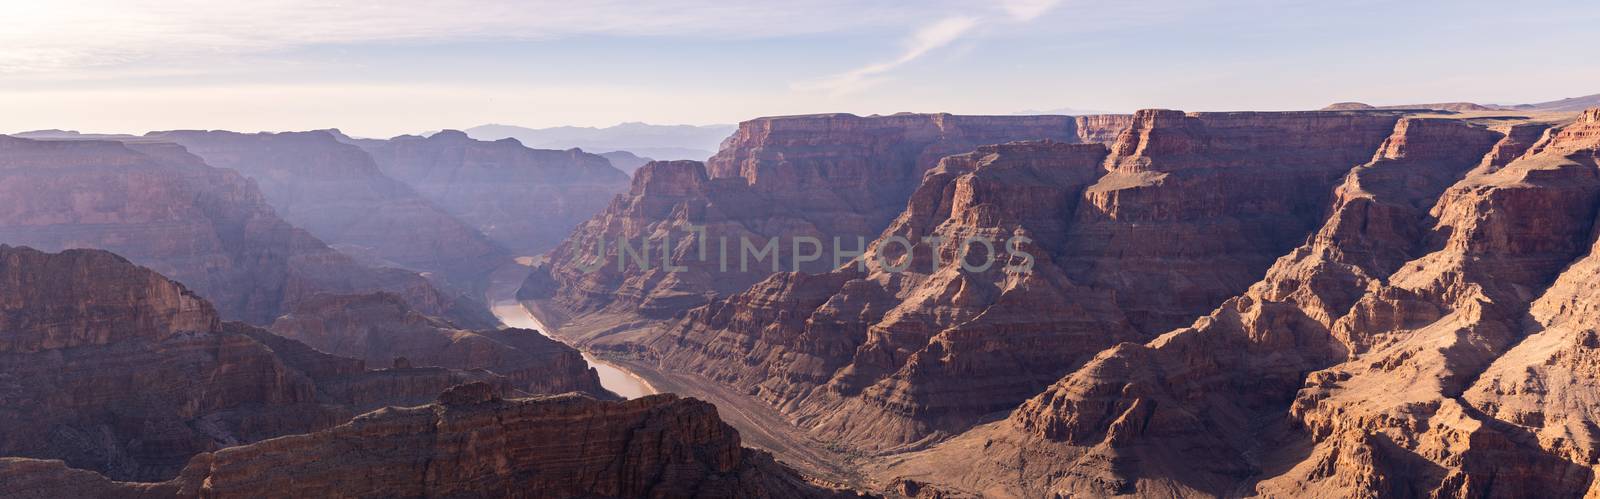 West rim of Grand Canyon in Arizona USA Panorama